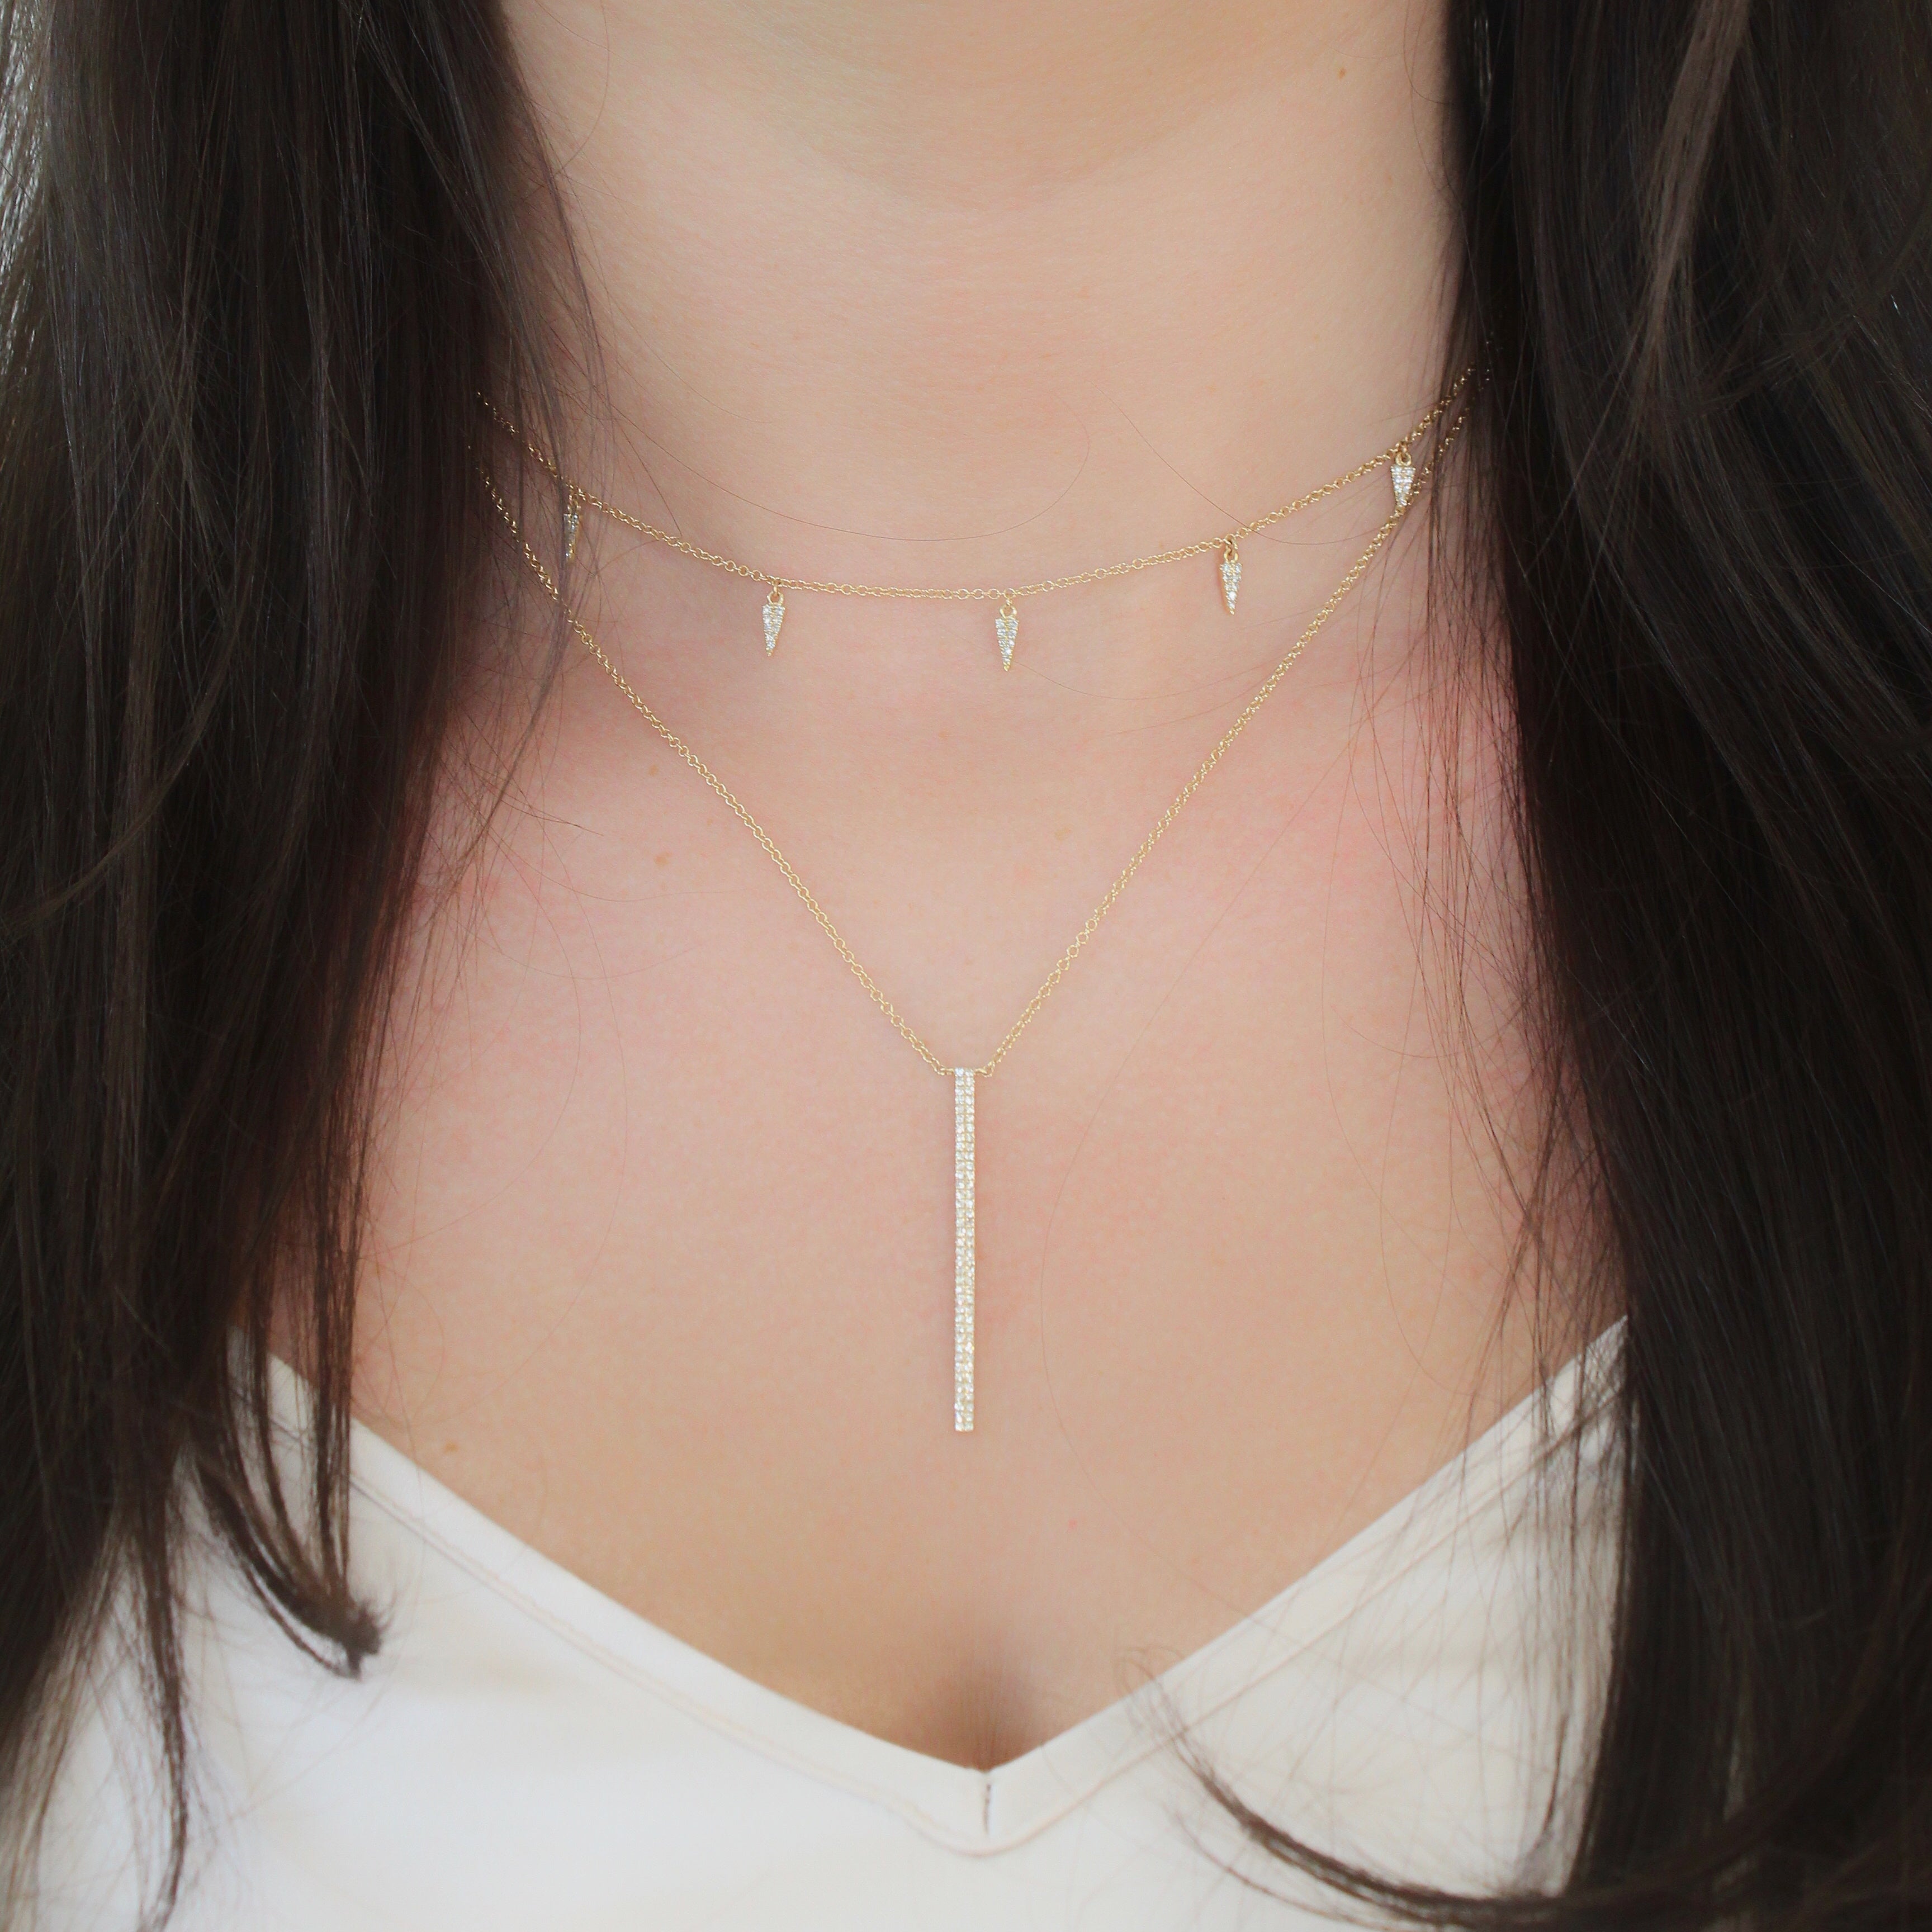 Medium Diamond Vertical Bar Necklace